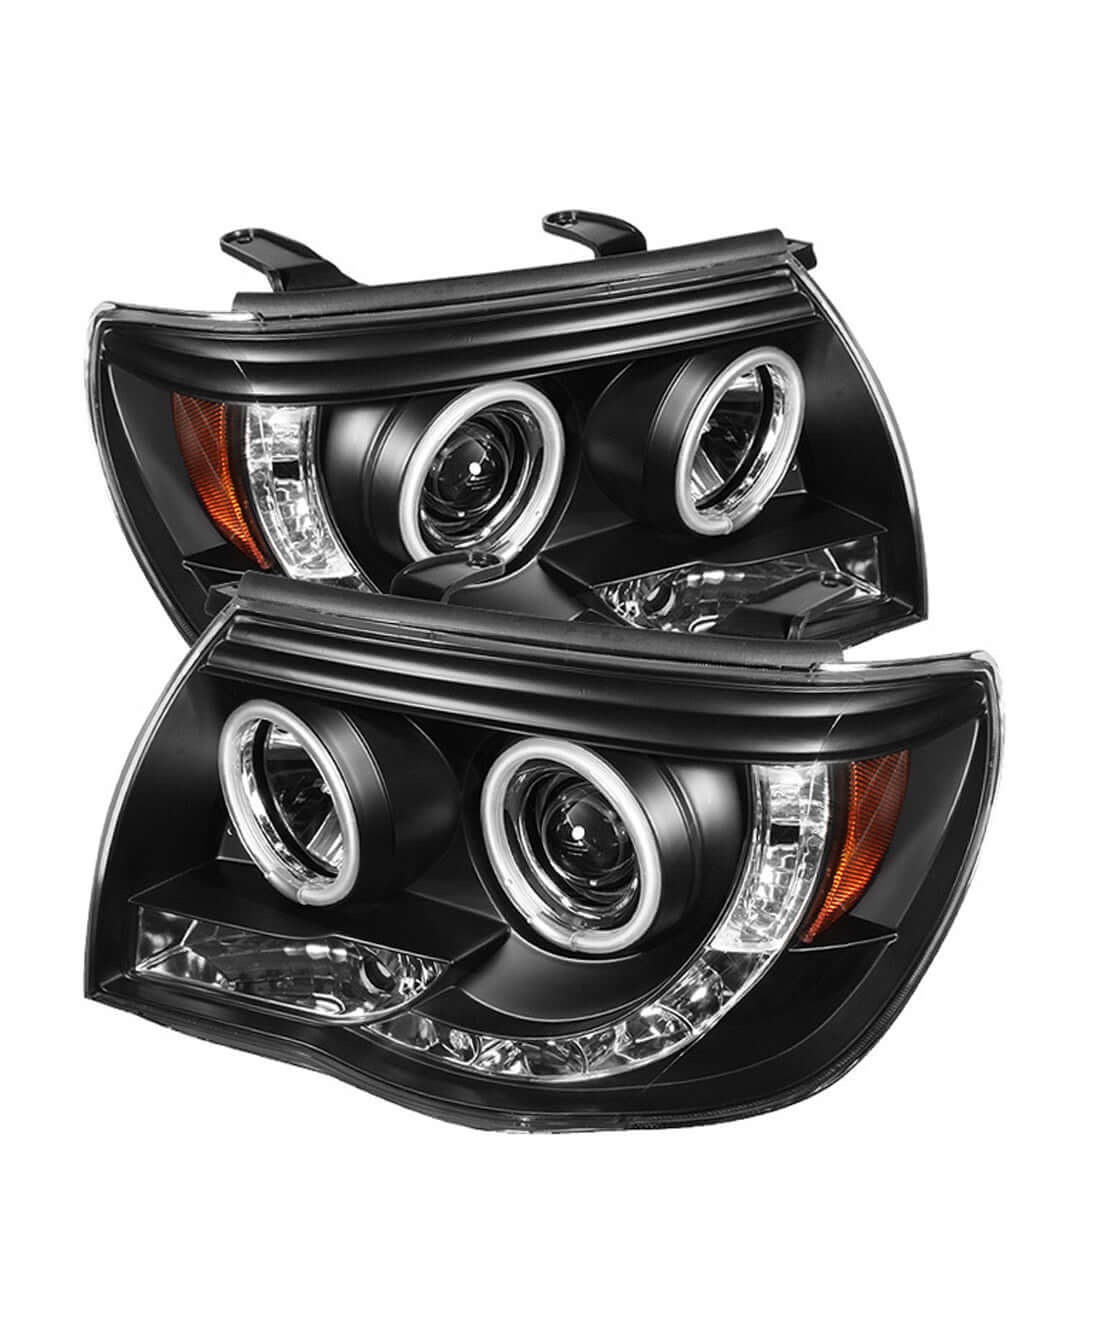 Spyder Auto Projector Headlights for 2005-2011 Toyota Tacoma